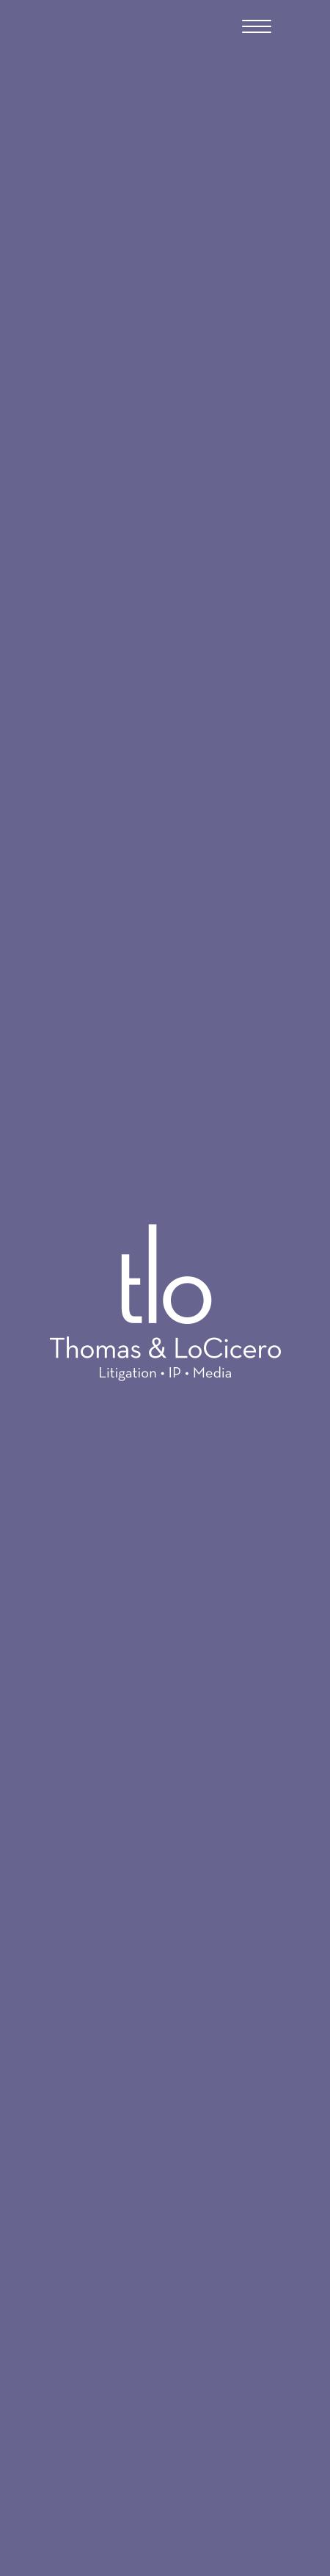 Thomas & LoCicero PL - Lake Worth FL Lawyers